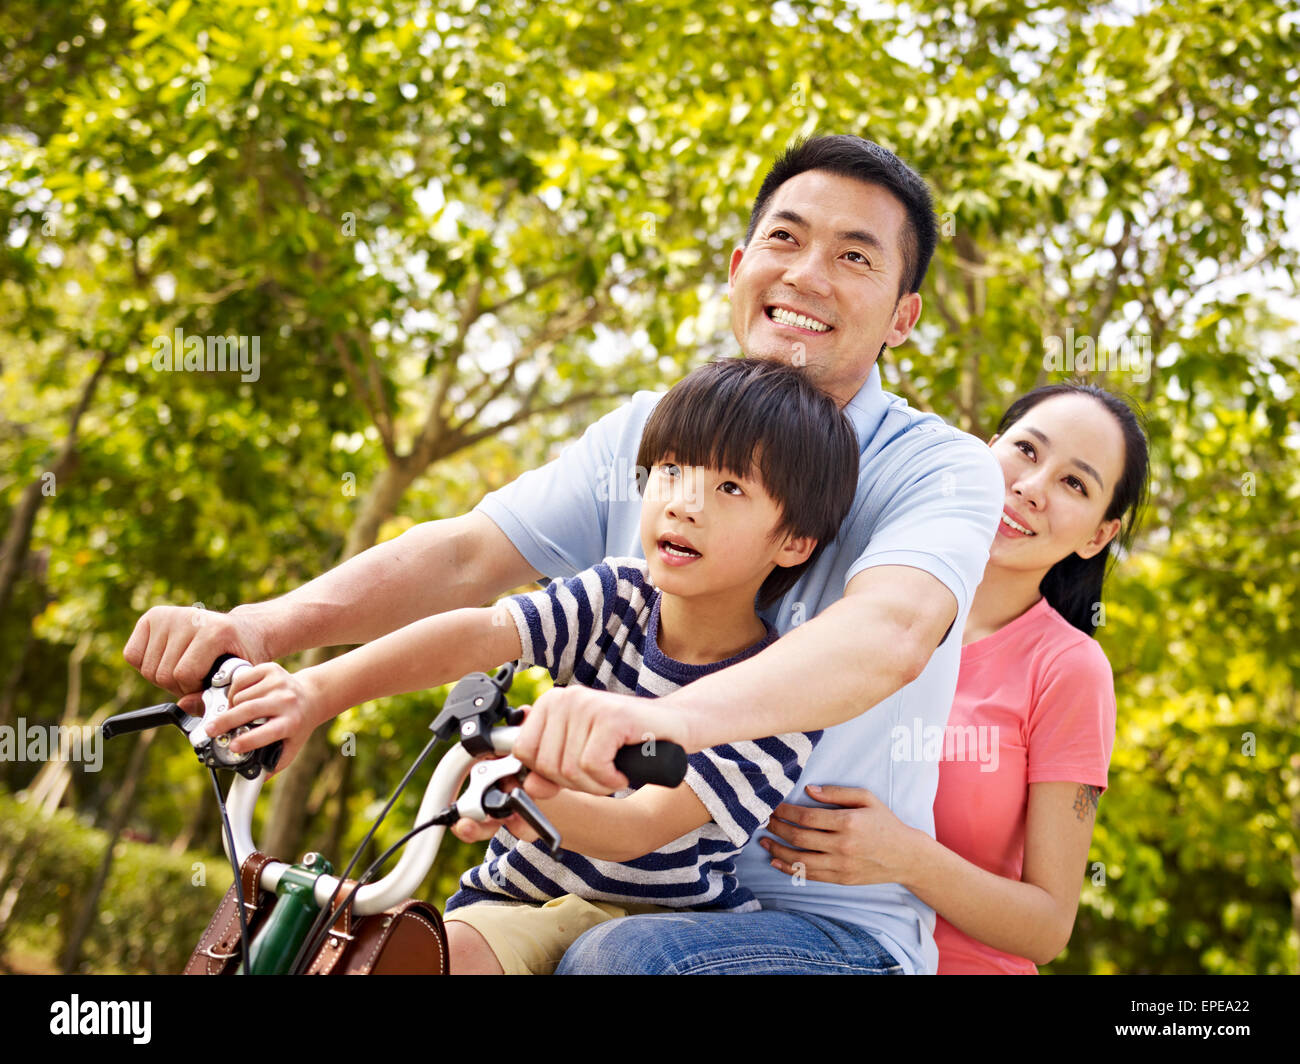 asian family riding bike outdoors Stock Photo